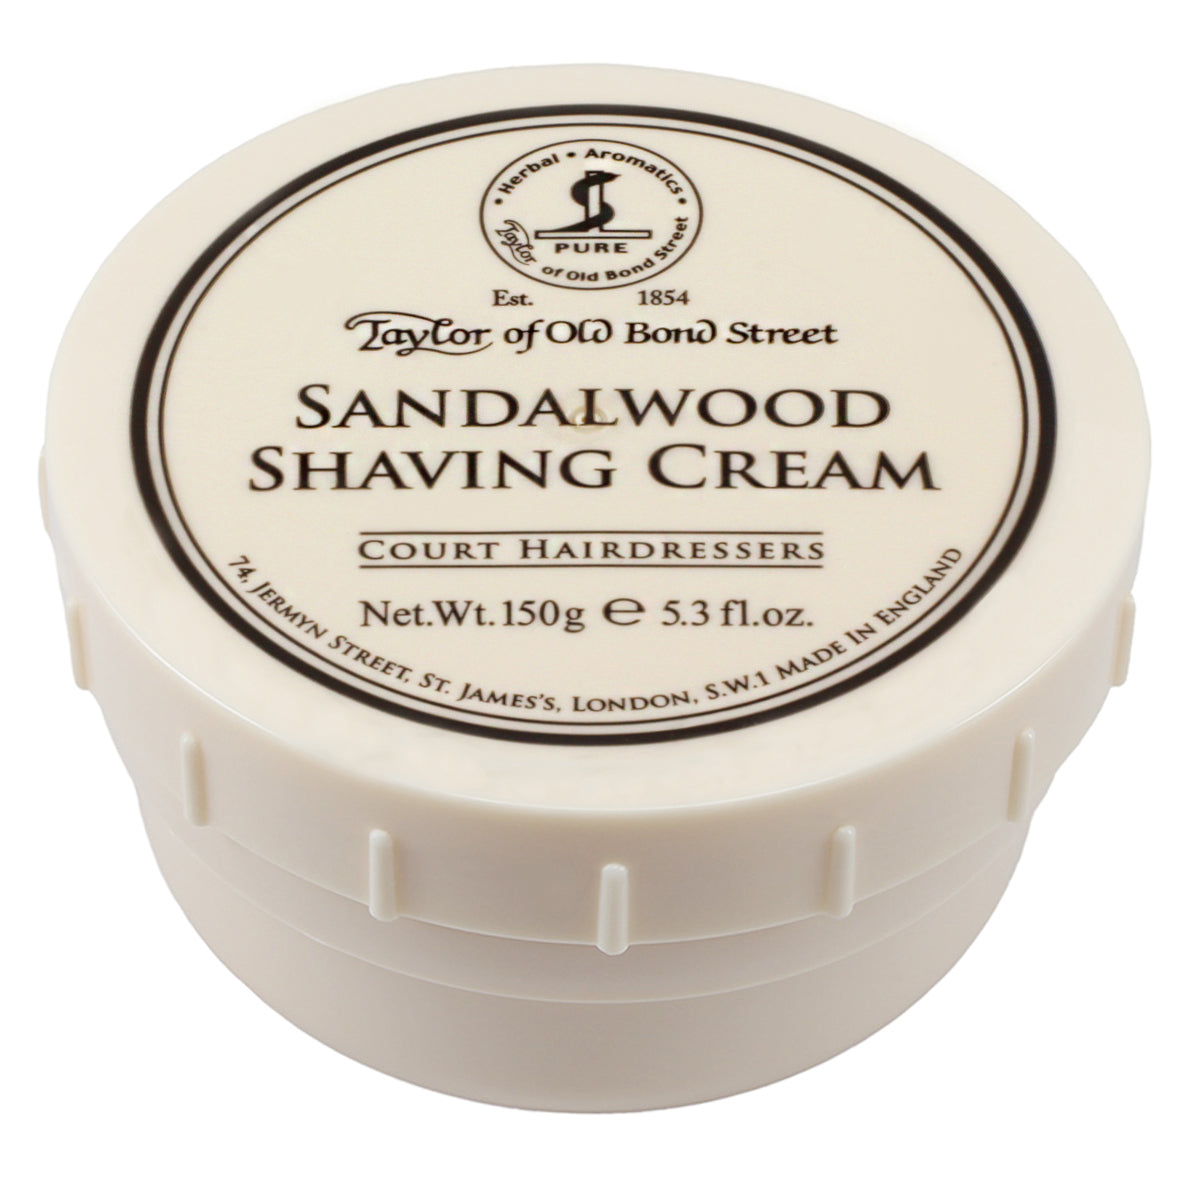 Primary image of Sandalwood Shaving Cream Bowl